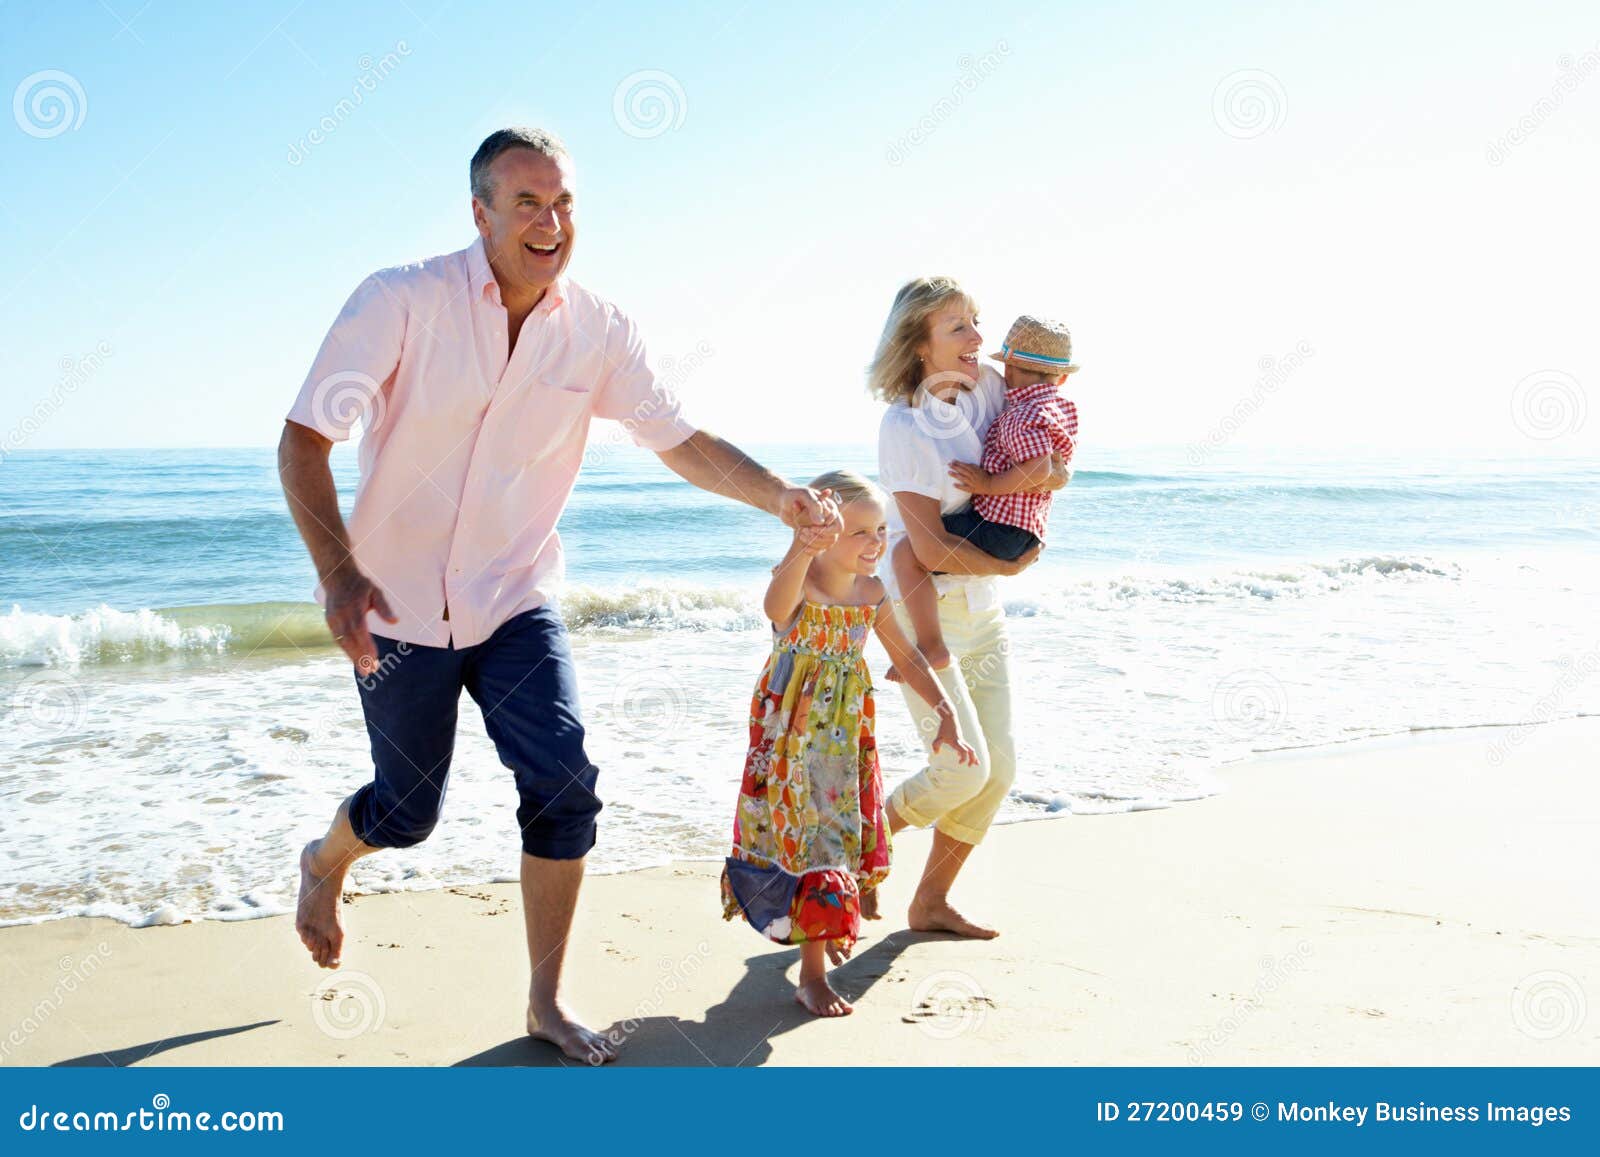 grandparents and grandchildren on beach